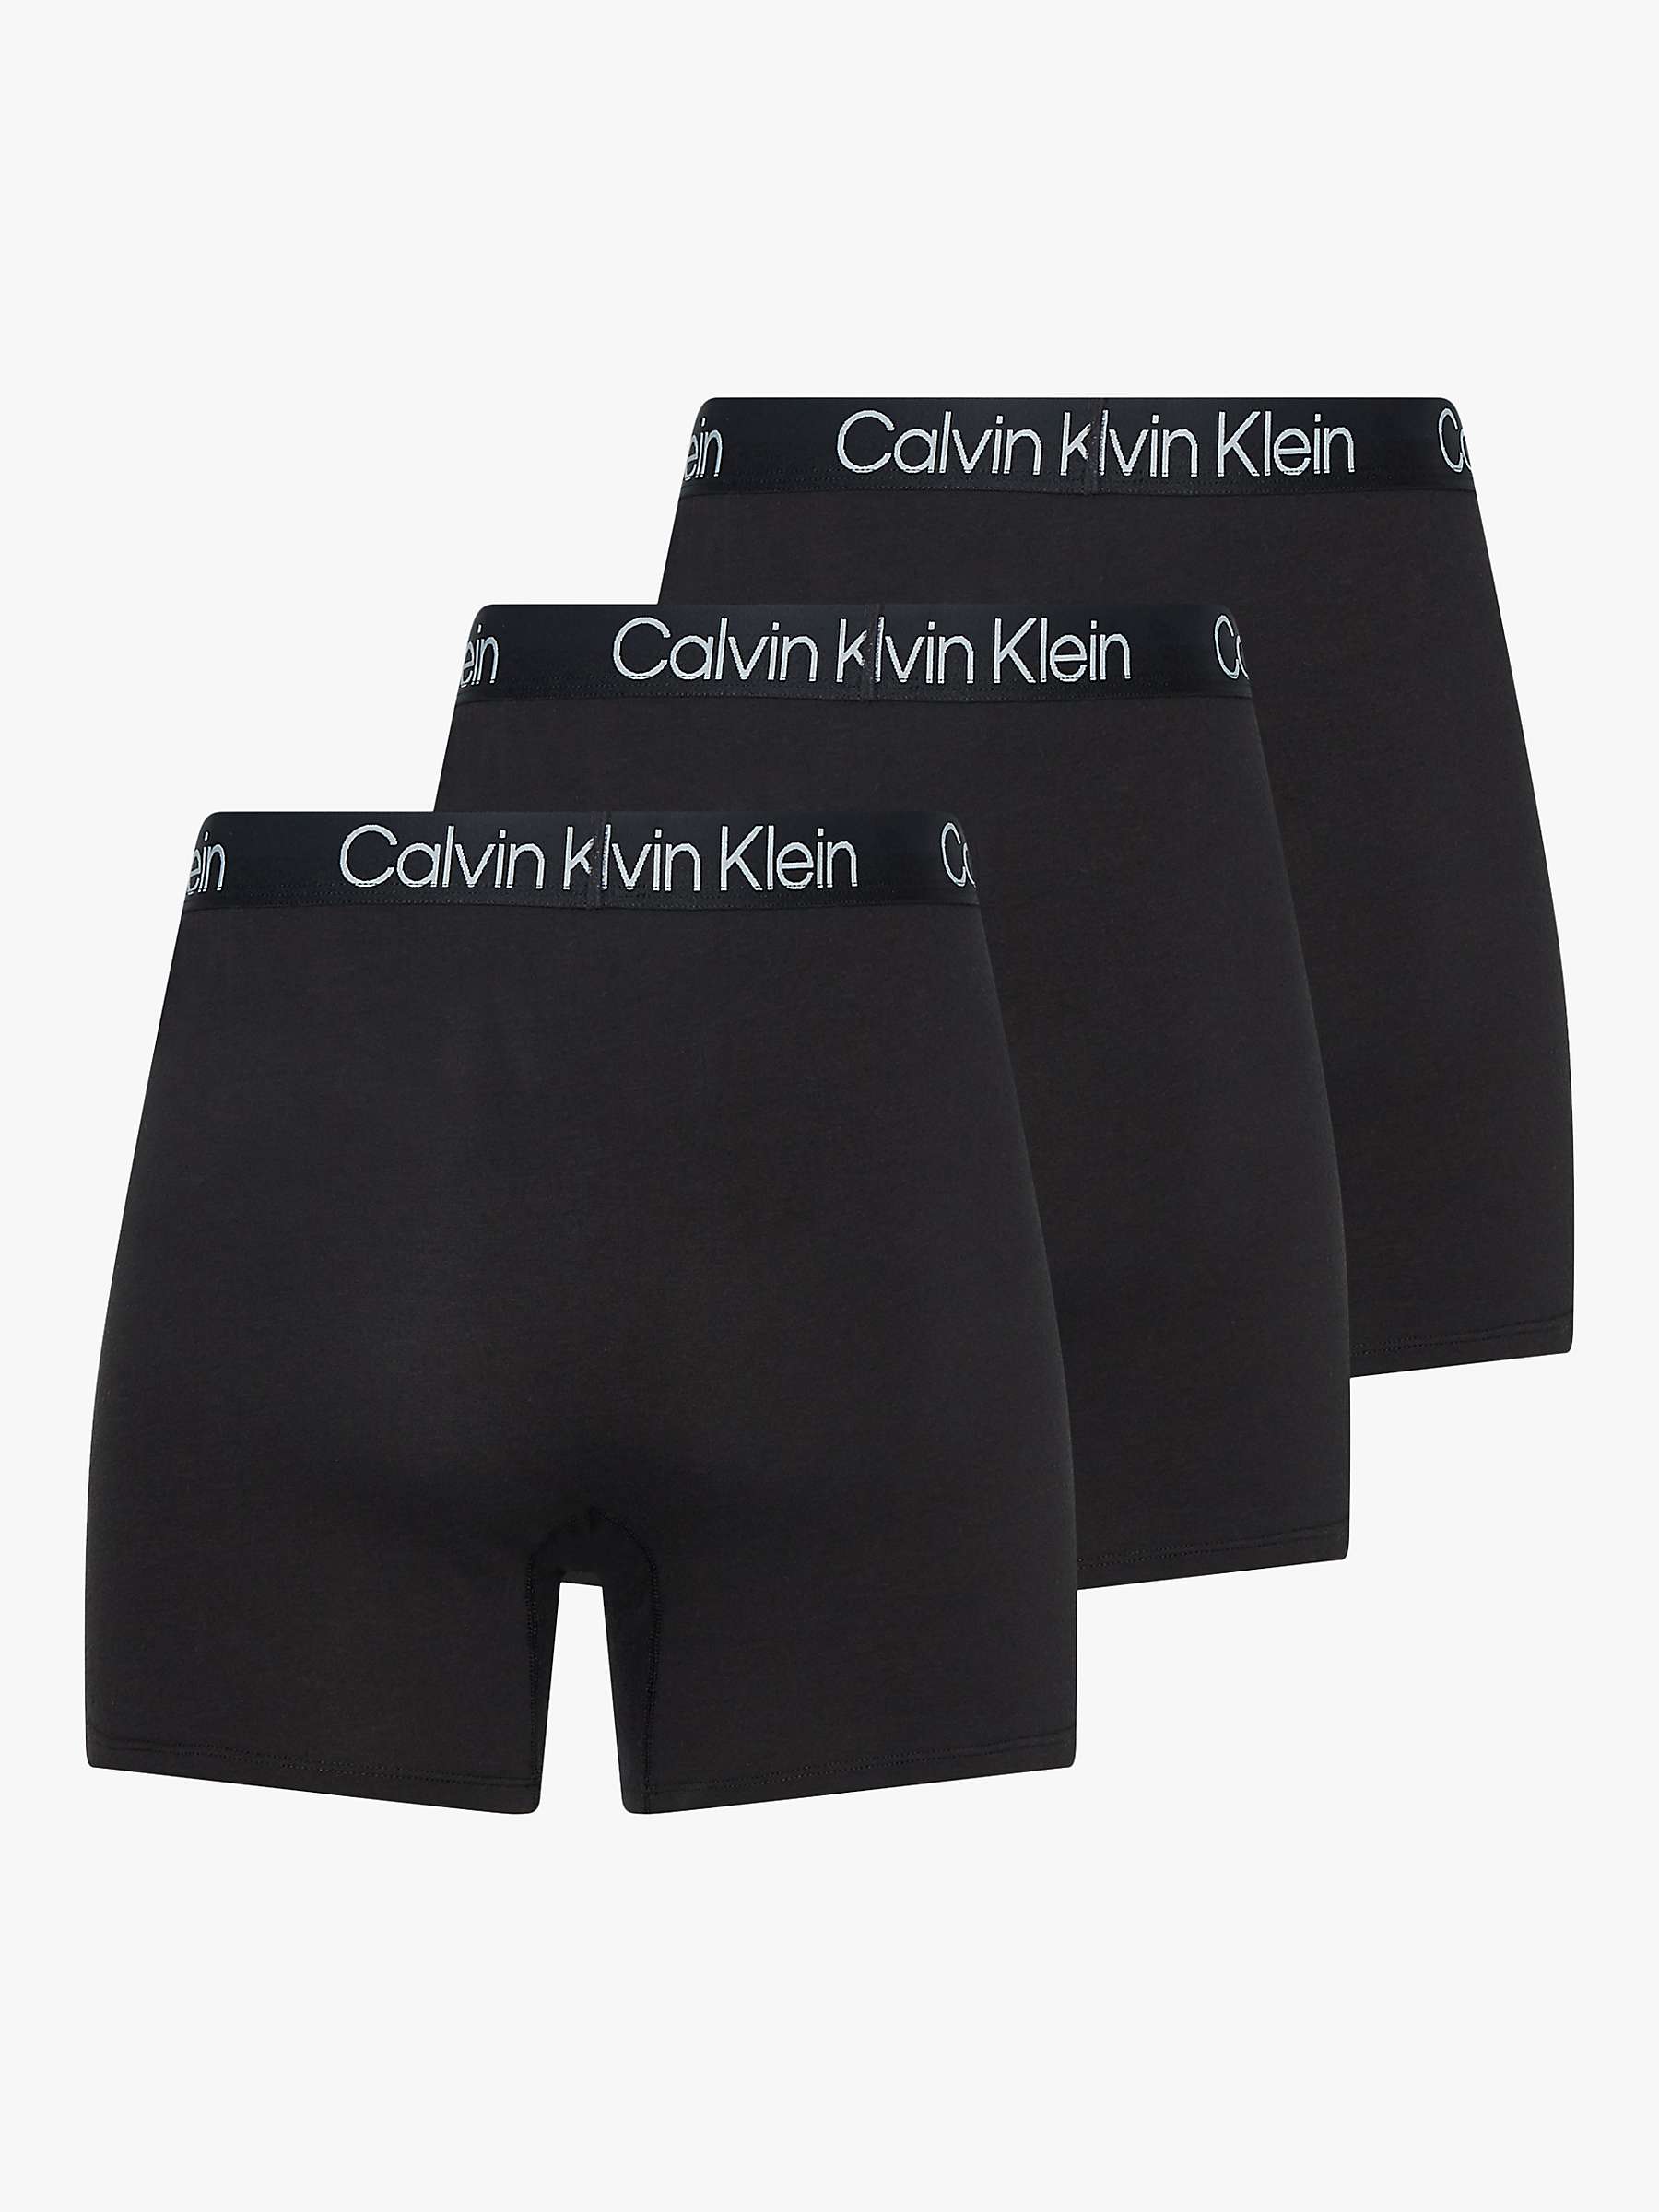 Calvin Klein Cotton Stretch Regular Fit Boxer Briefs, Pack of 3, Black at  John Lewis & Partners